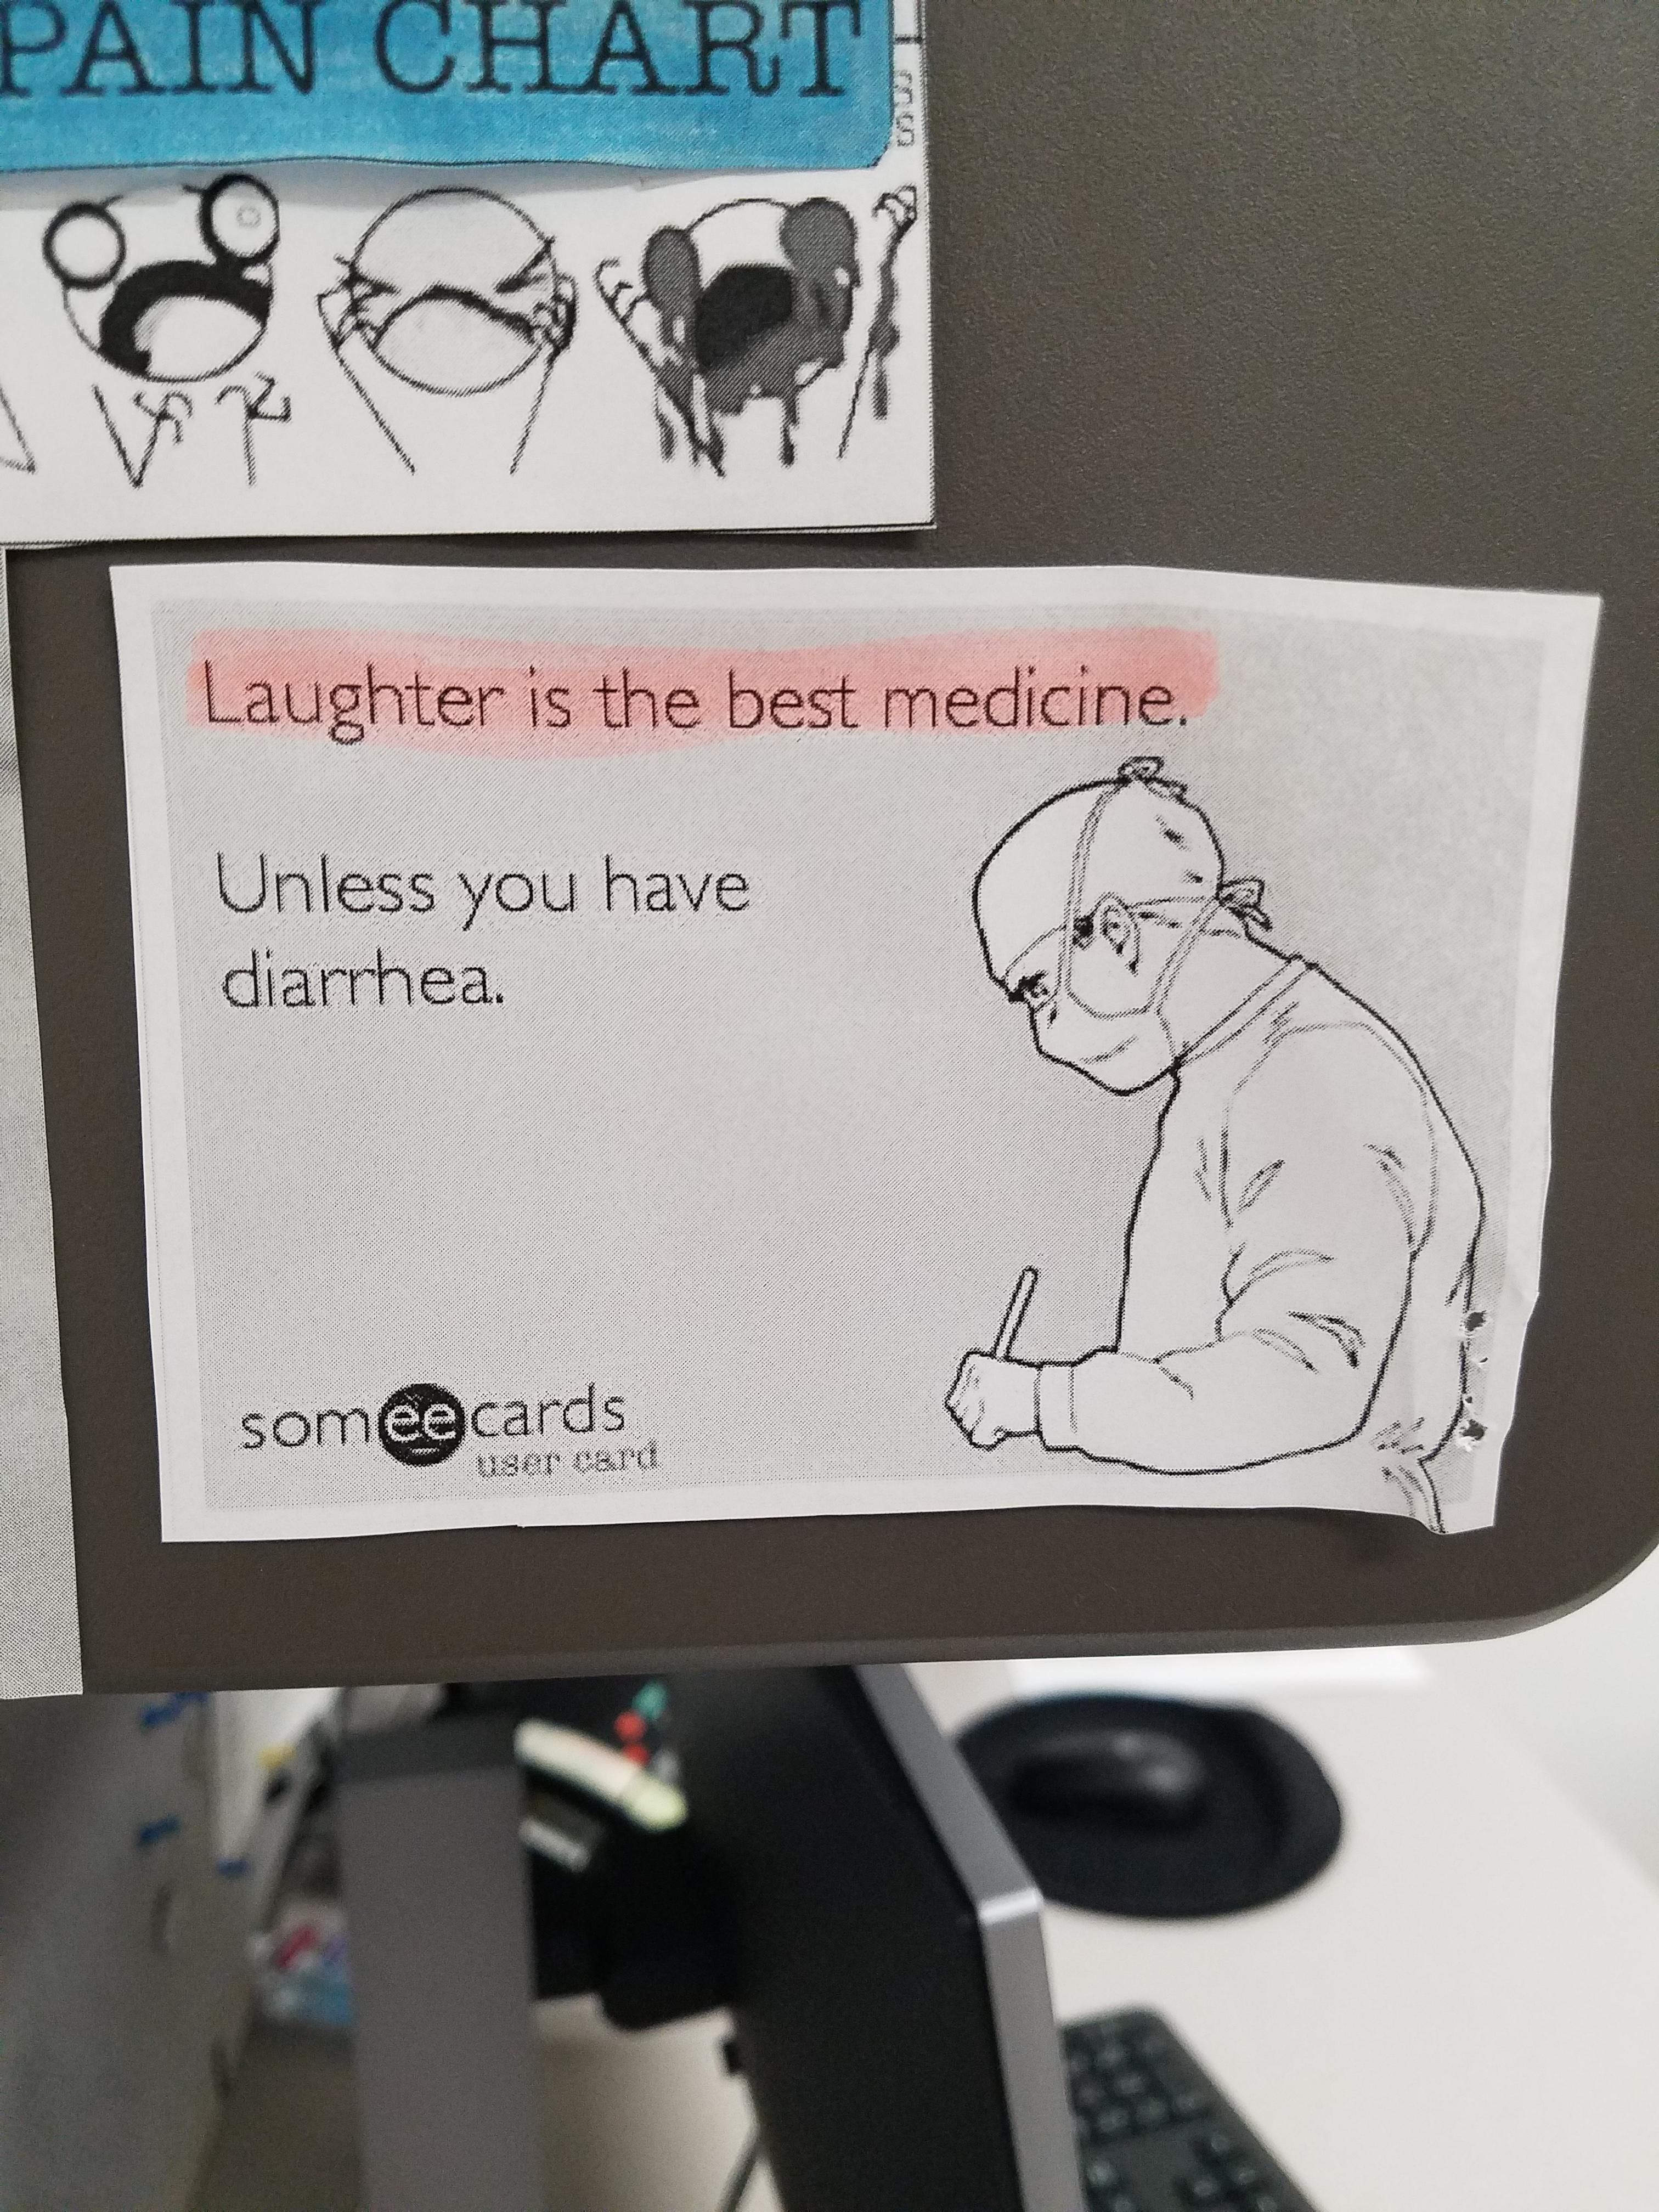 My gastroenterologists idea of humor